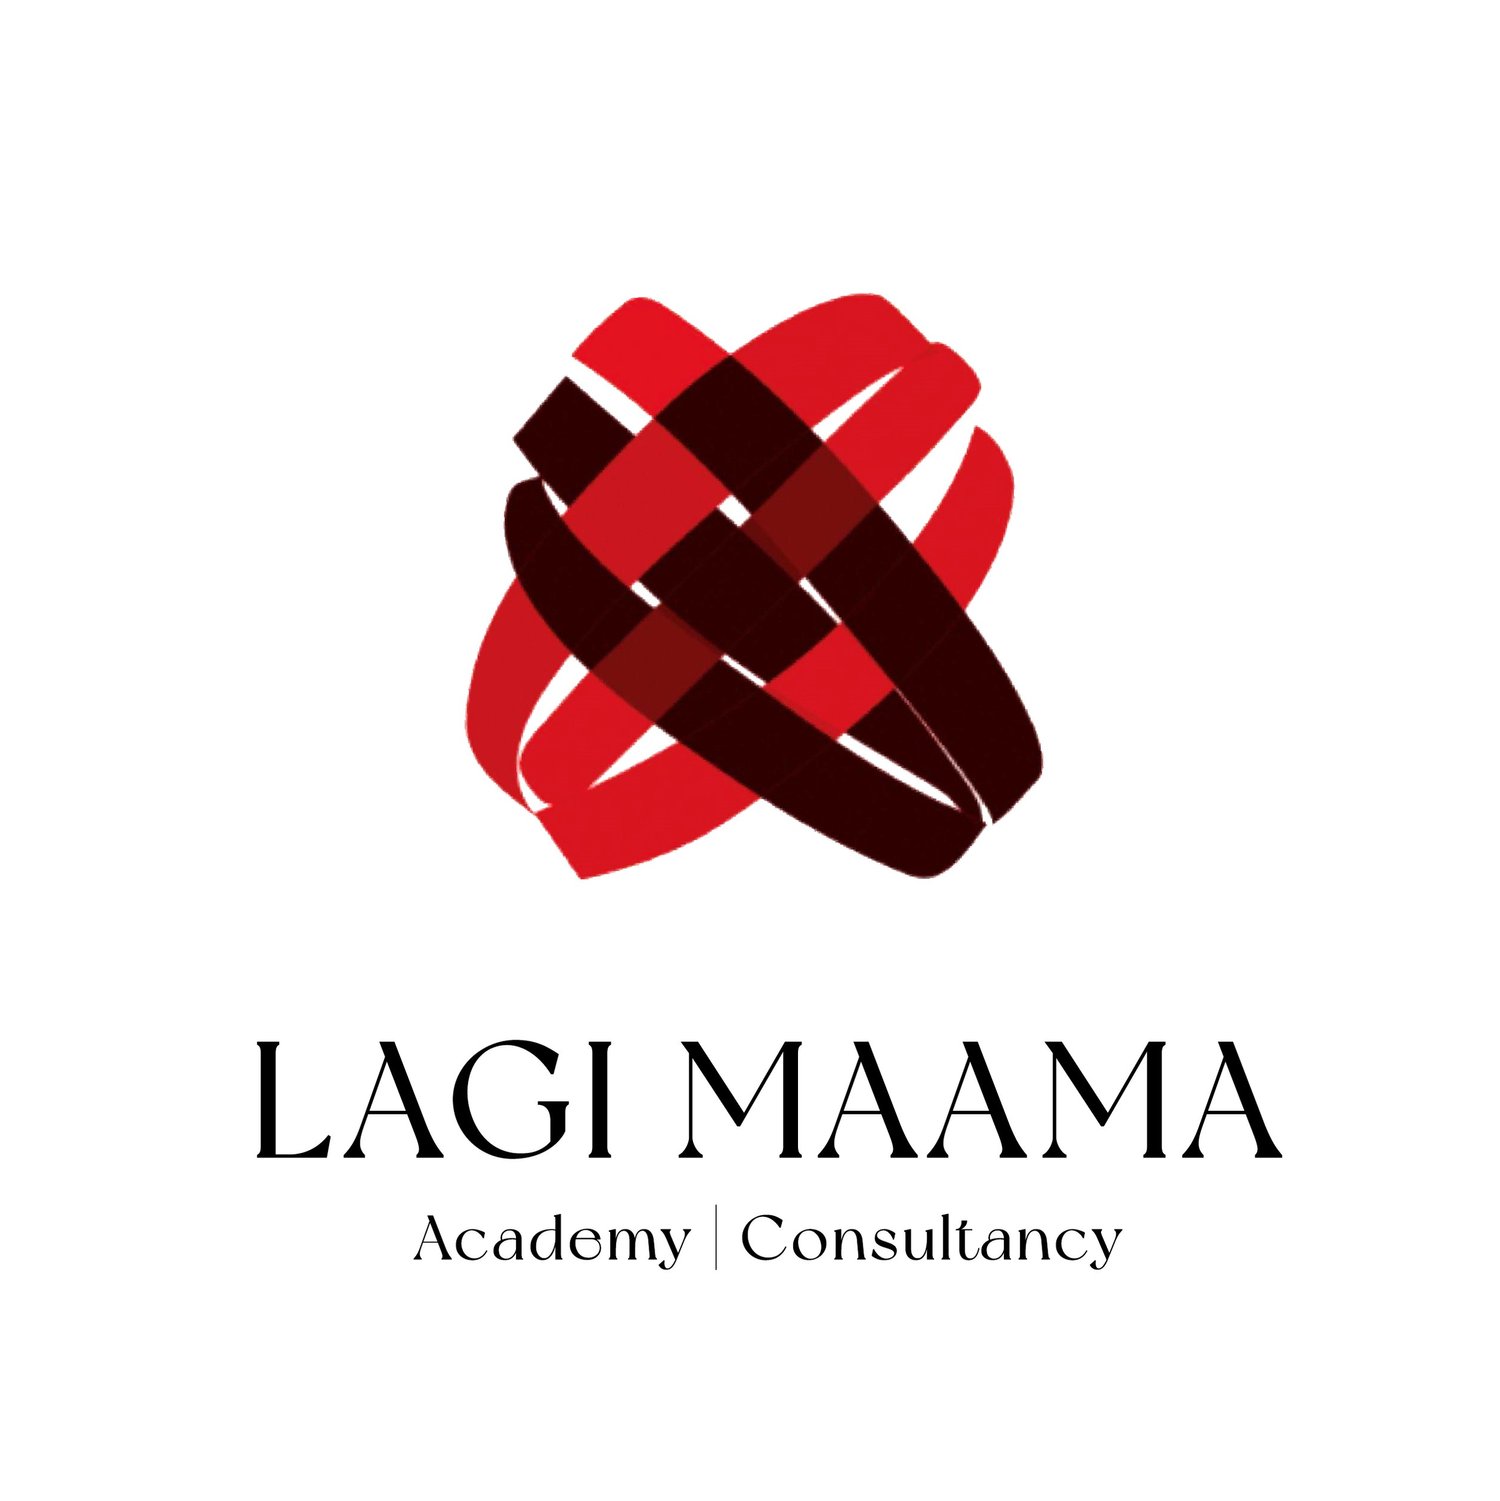 Lagi-Maama home page